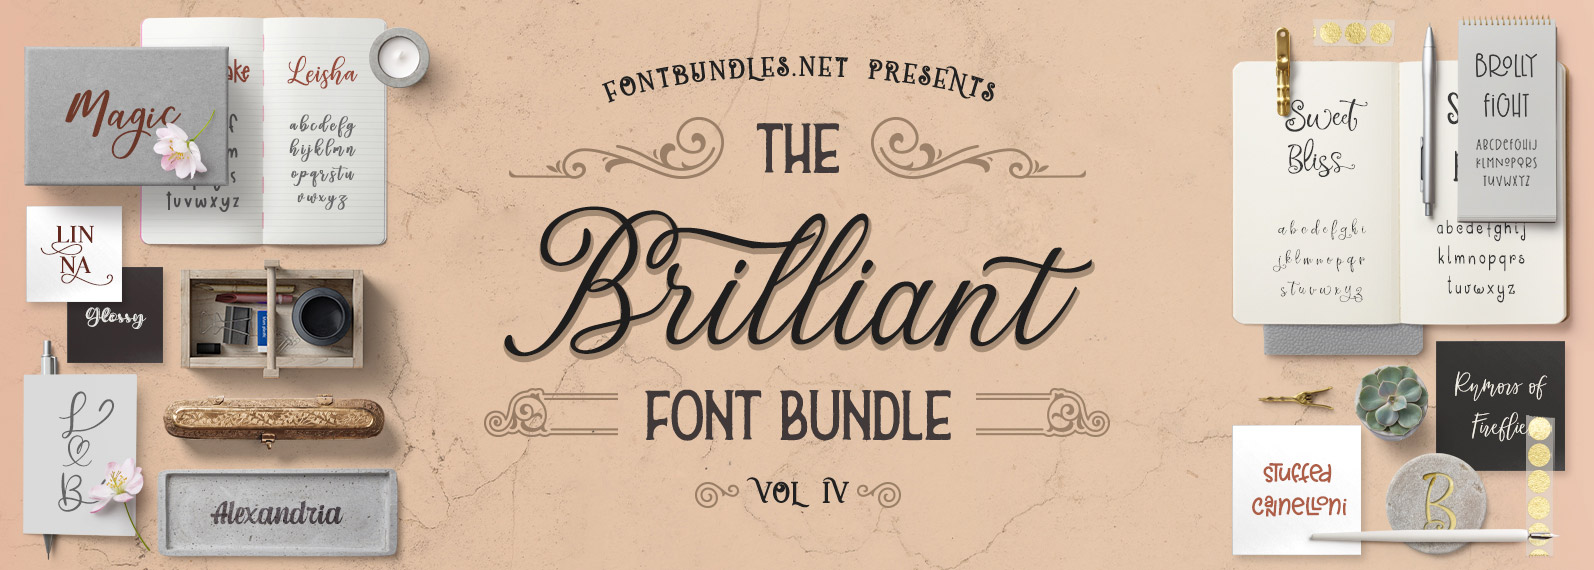 The-Brilliant-Font-Bundle-IV-cover.jpg